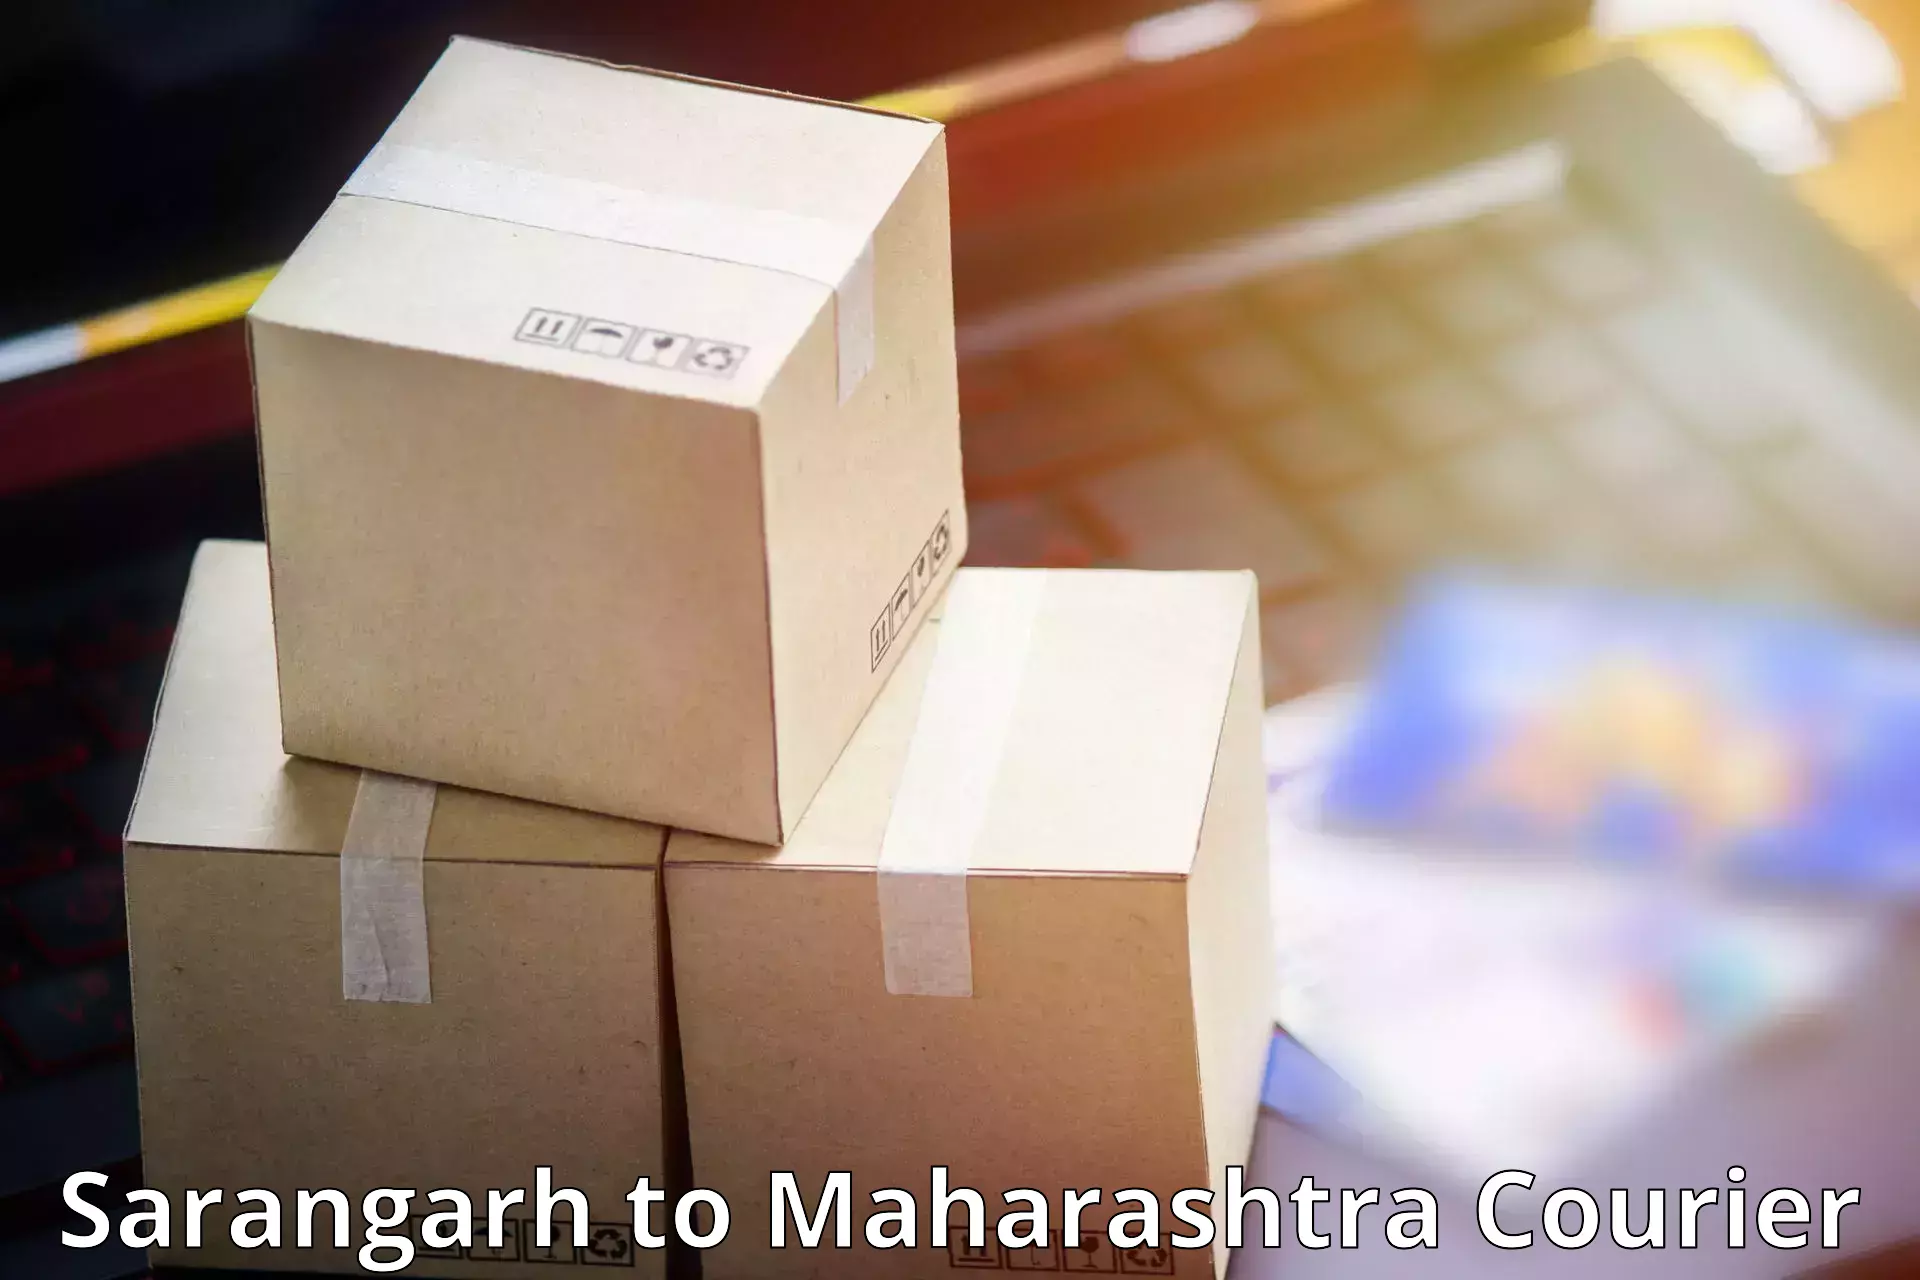 Courier service innovation Sarangarh to Karmala